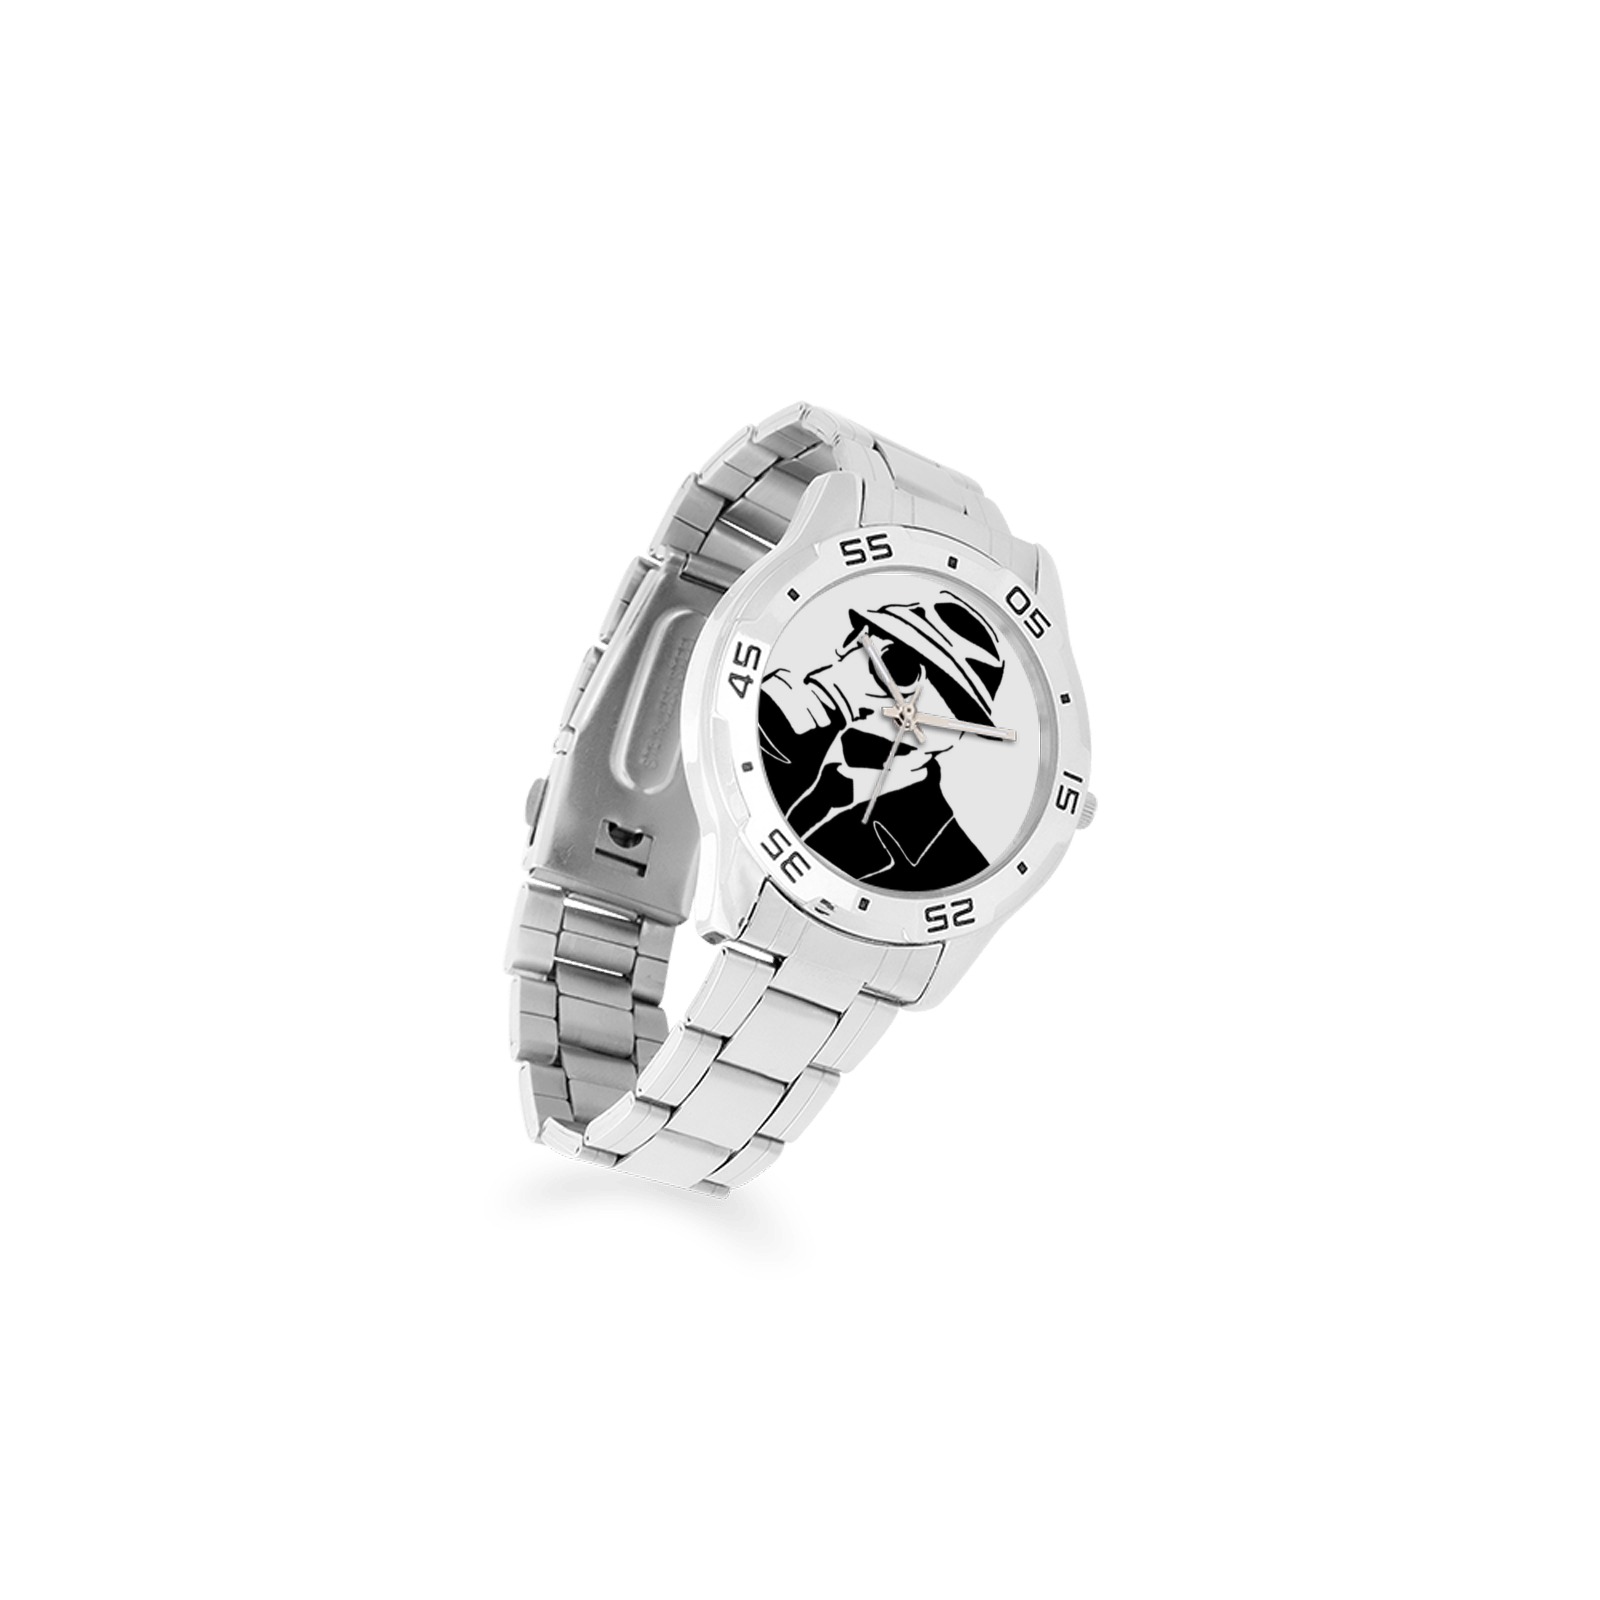 95621022 Men's Stainless Steel Analog Watch(Model 108)